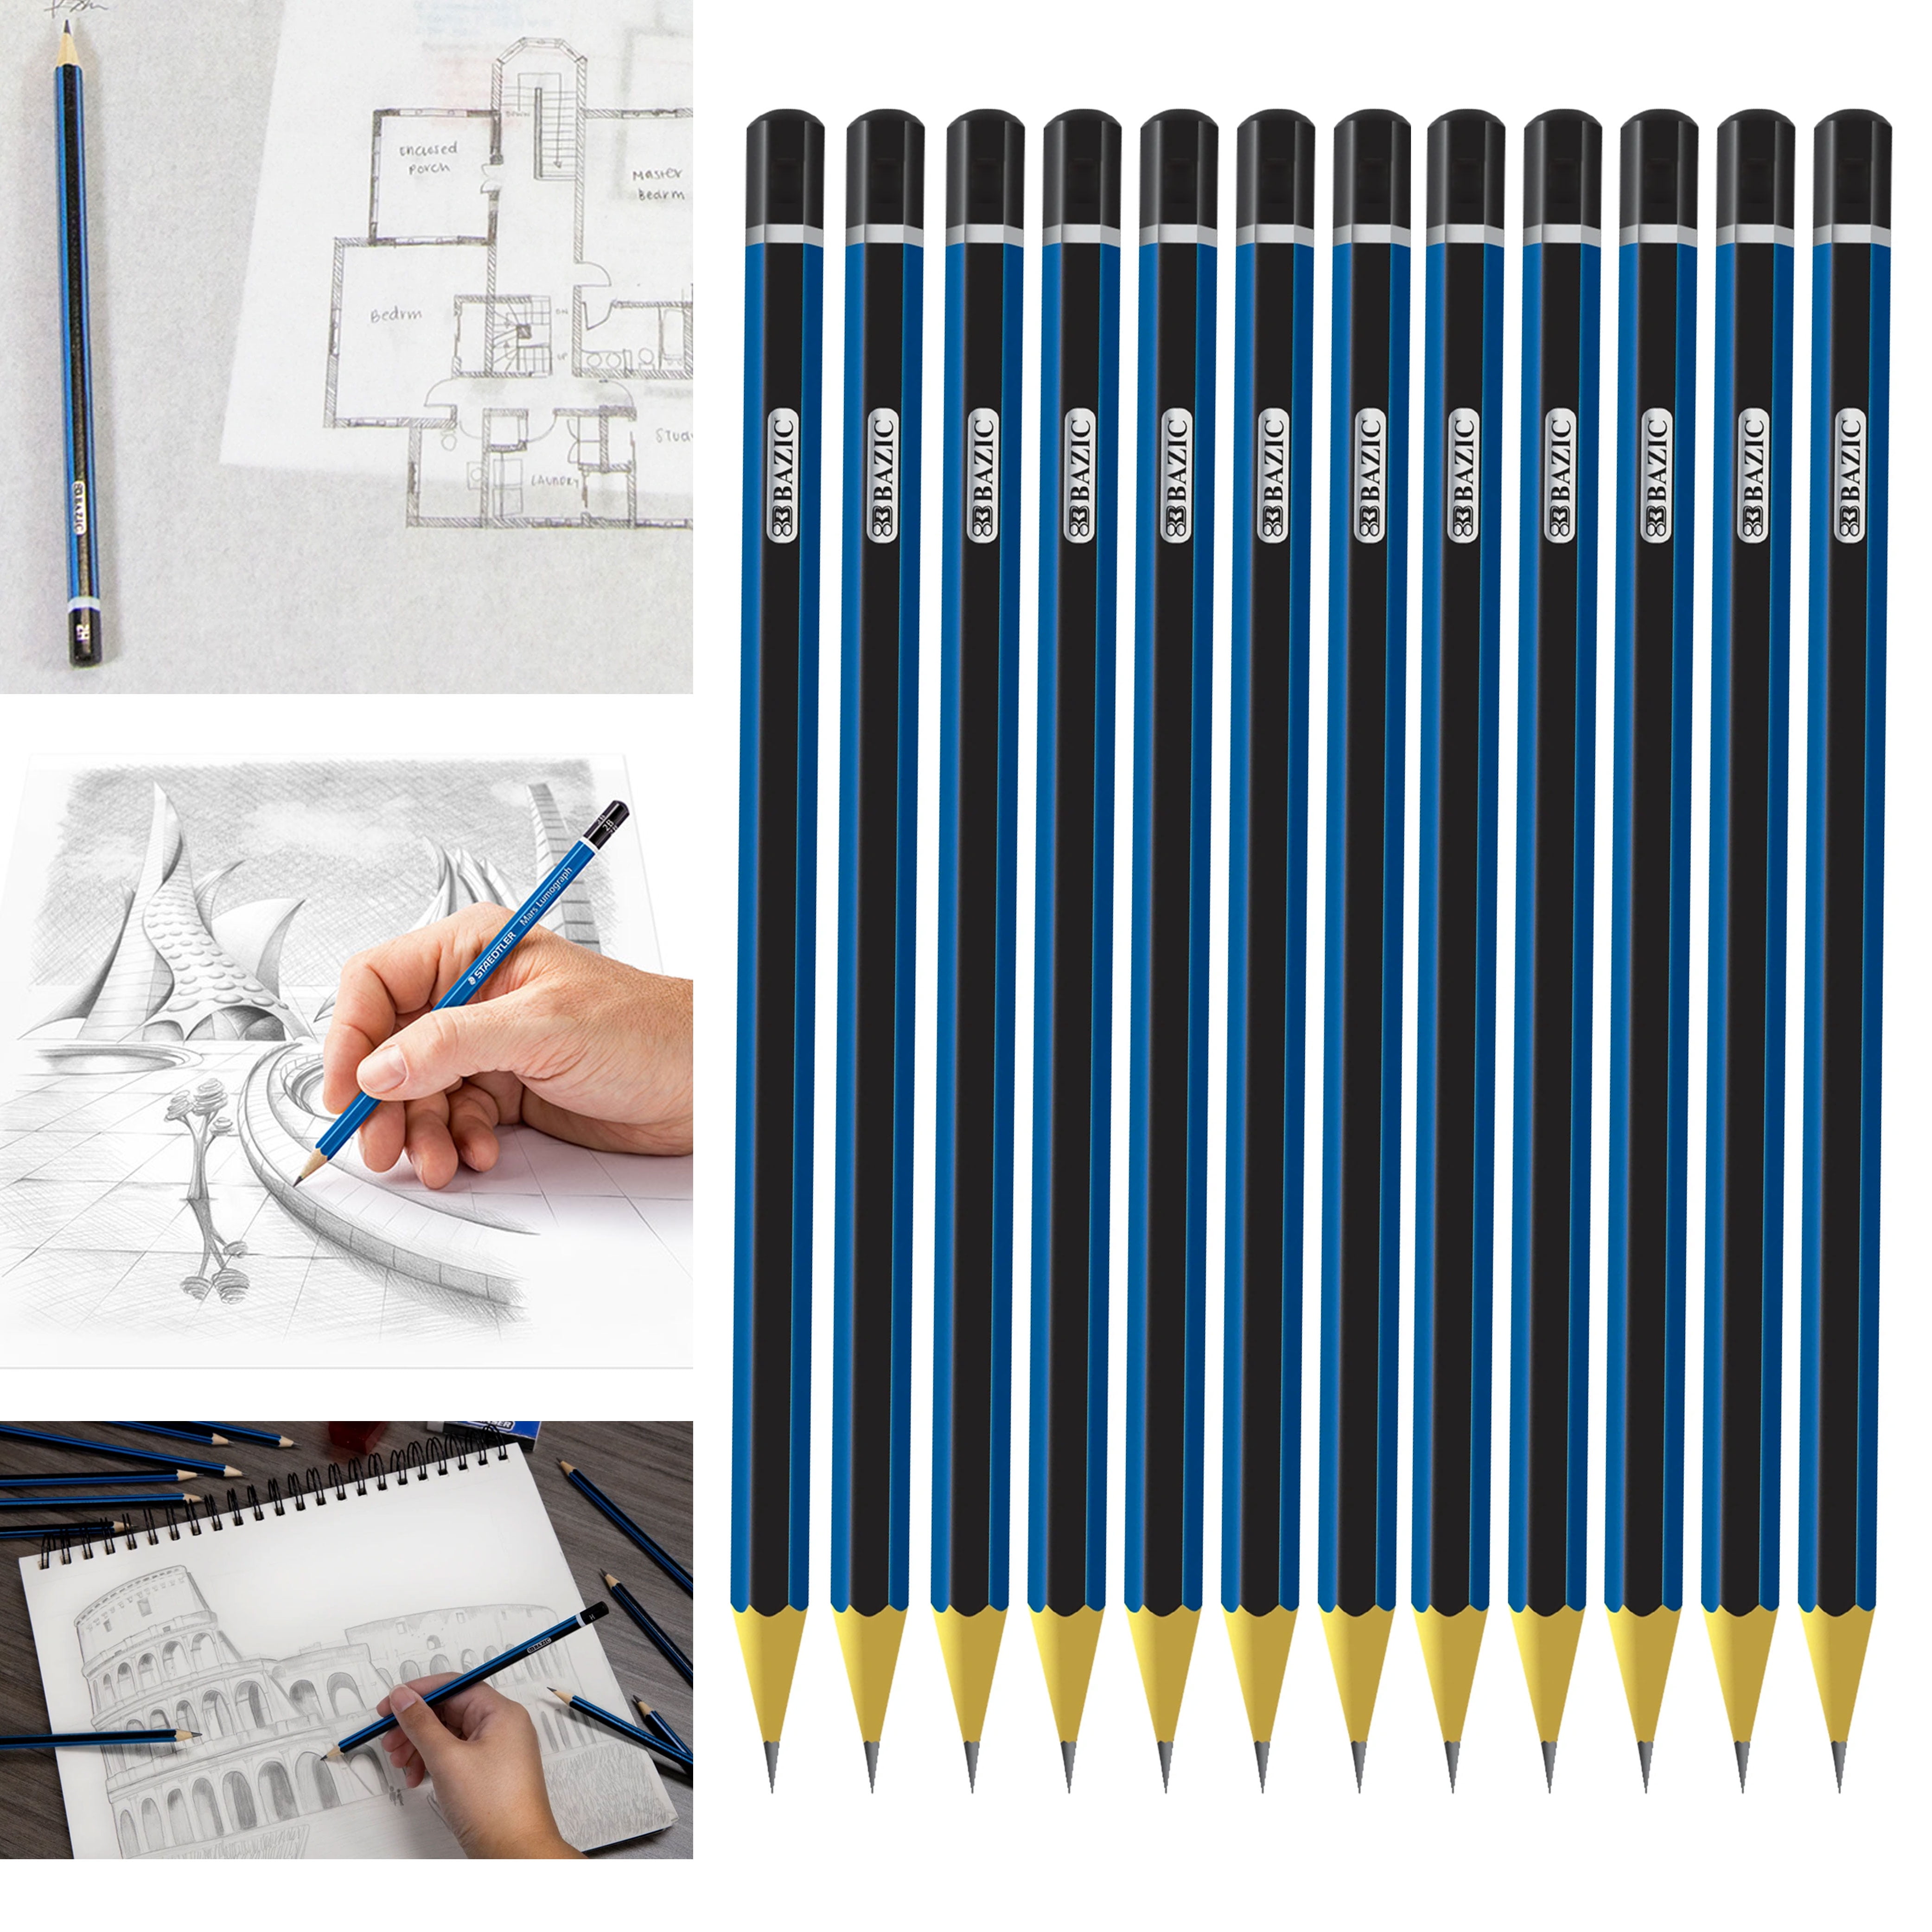 83 Pcs Advanced Colored Pencils Set Drawing Pencils and Sketching